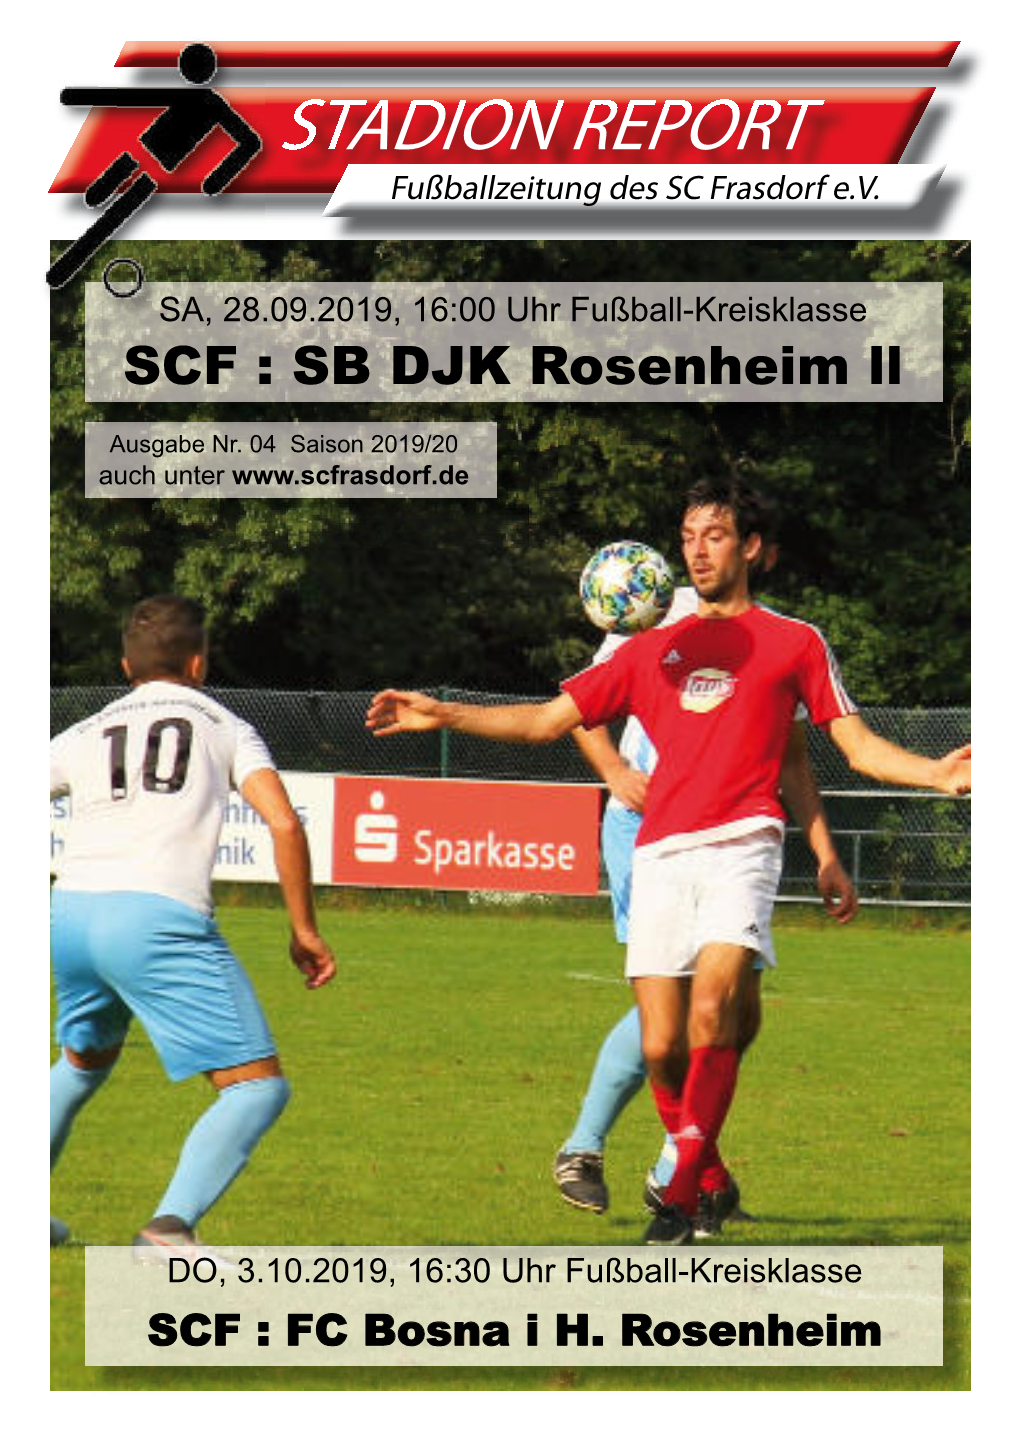 STADION REPORT Fußballzeitung Des SC Frasdorf E.V